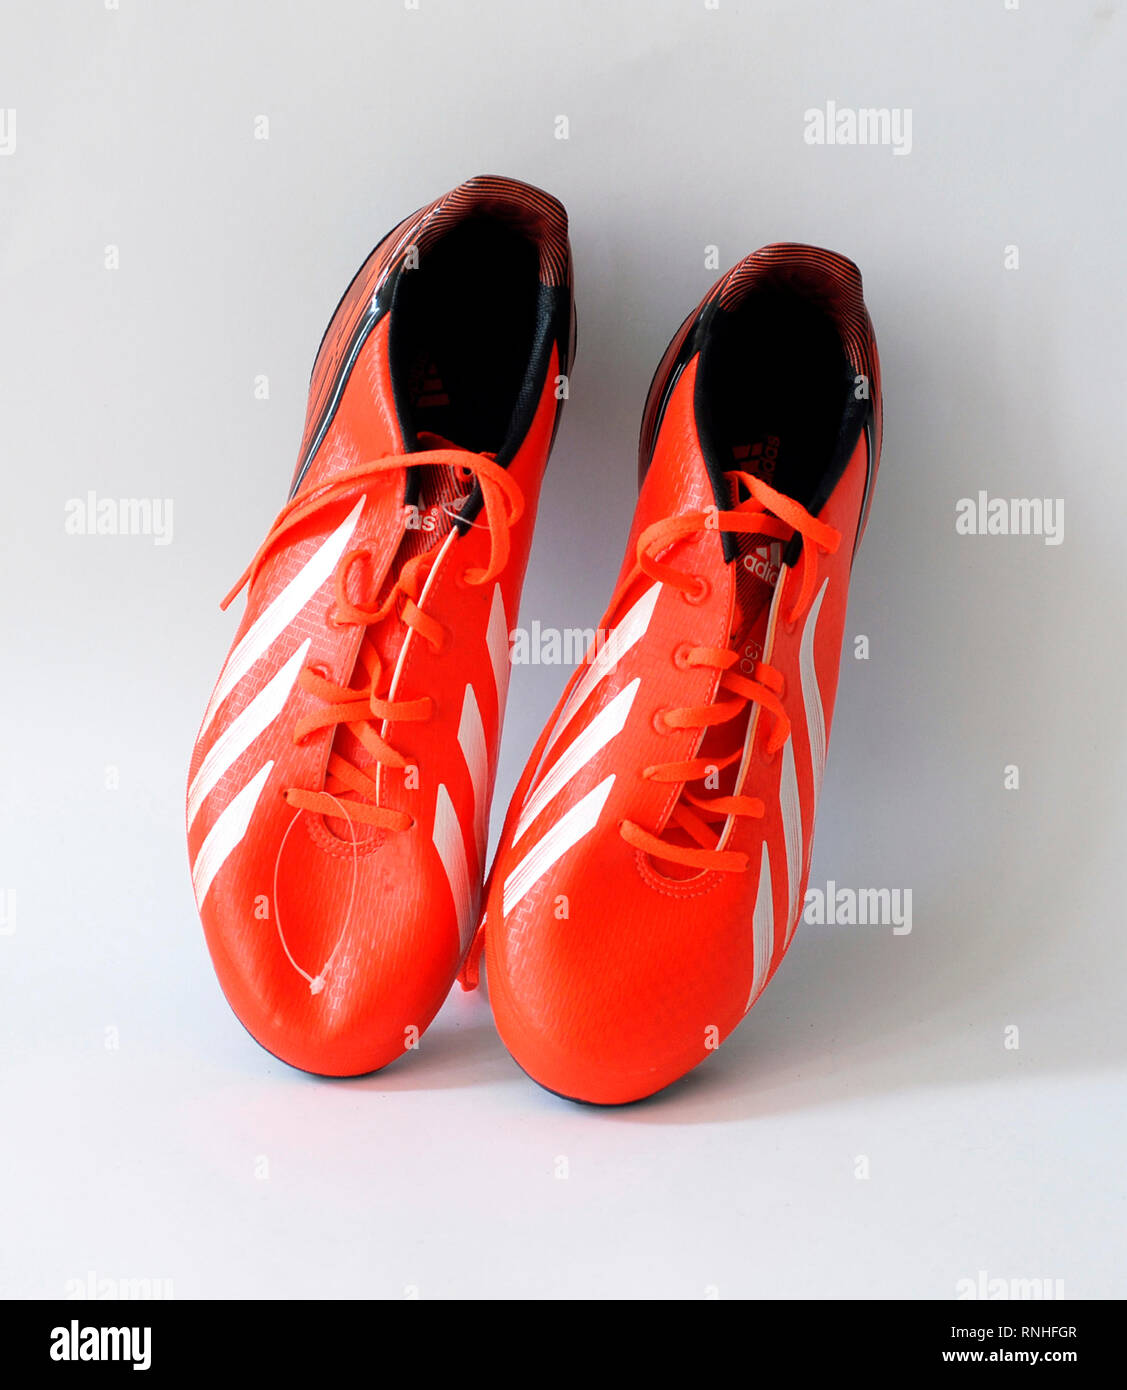 Adidas Football Boots Banque d'image et photos - Alamy